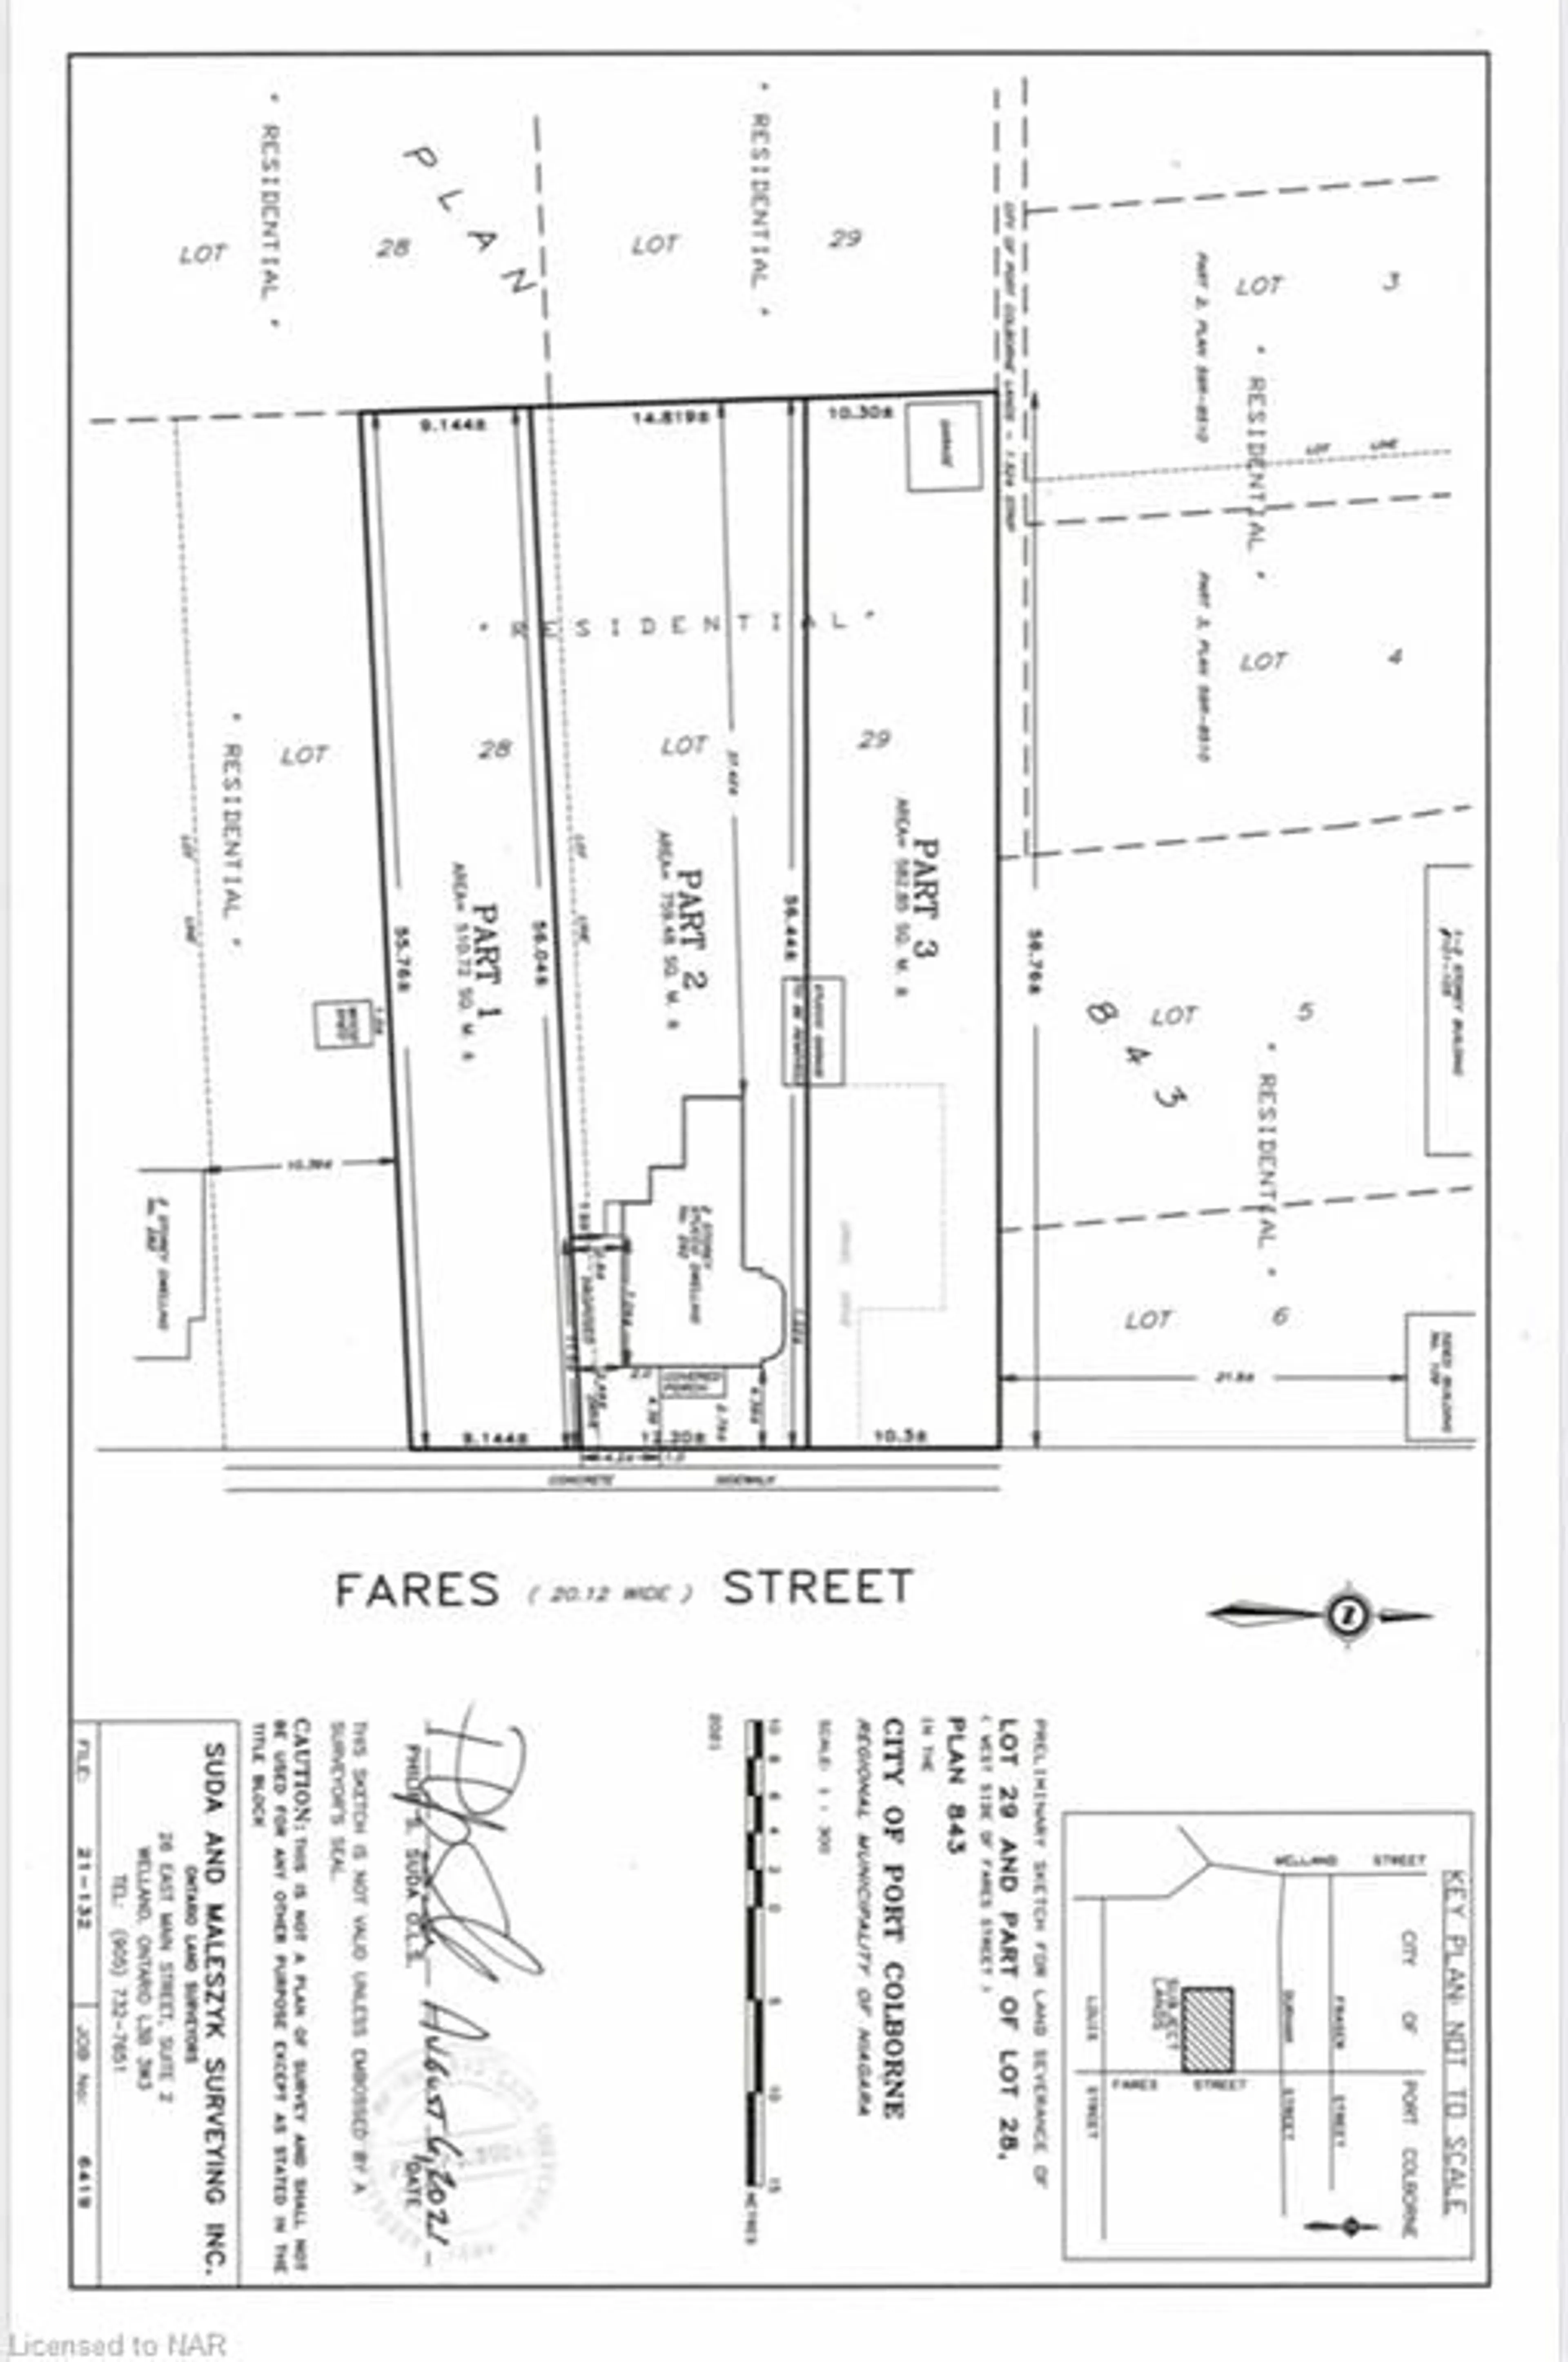 Floor plan for PT 3 LOT 29 Fares St, Port Colborne Ontario L3K 1W8